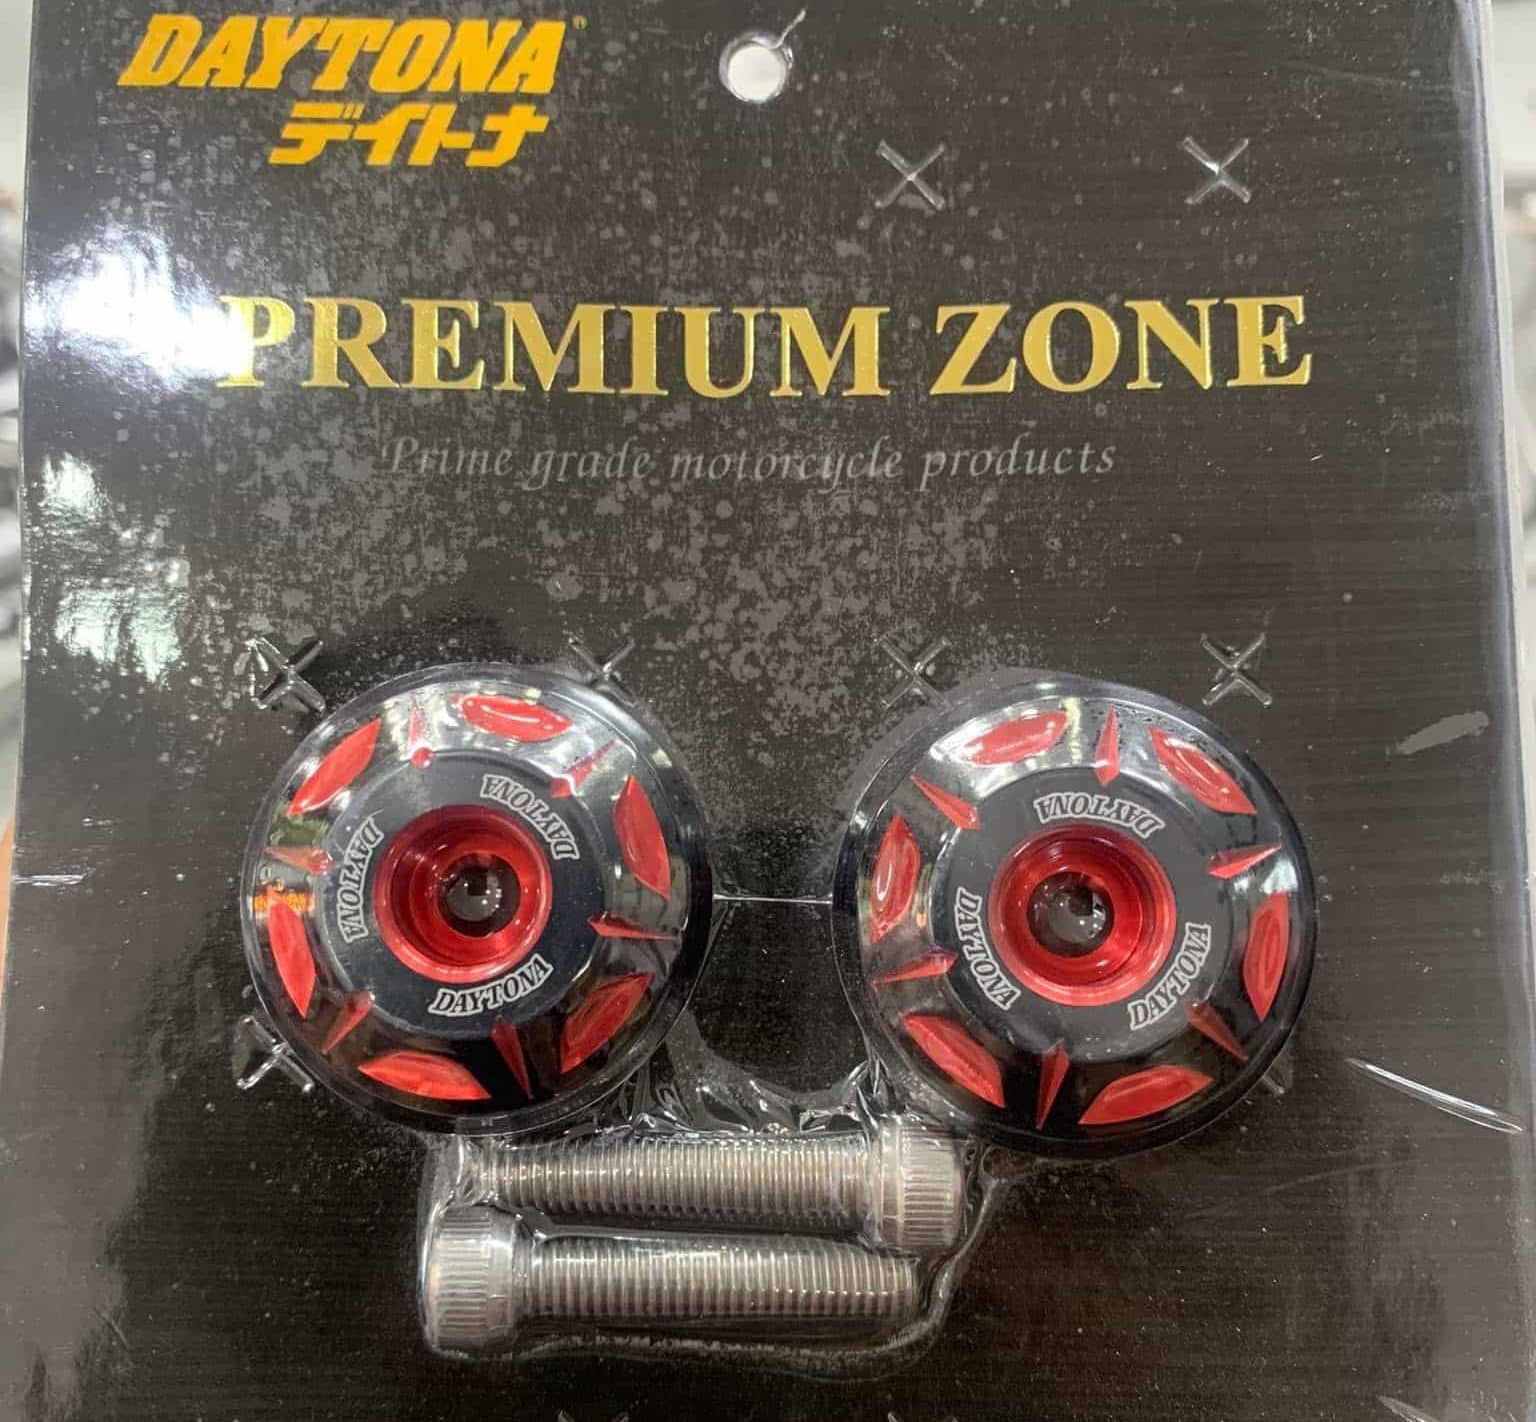  Gù tay lái Daytona Premium Zone 